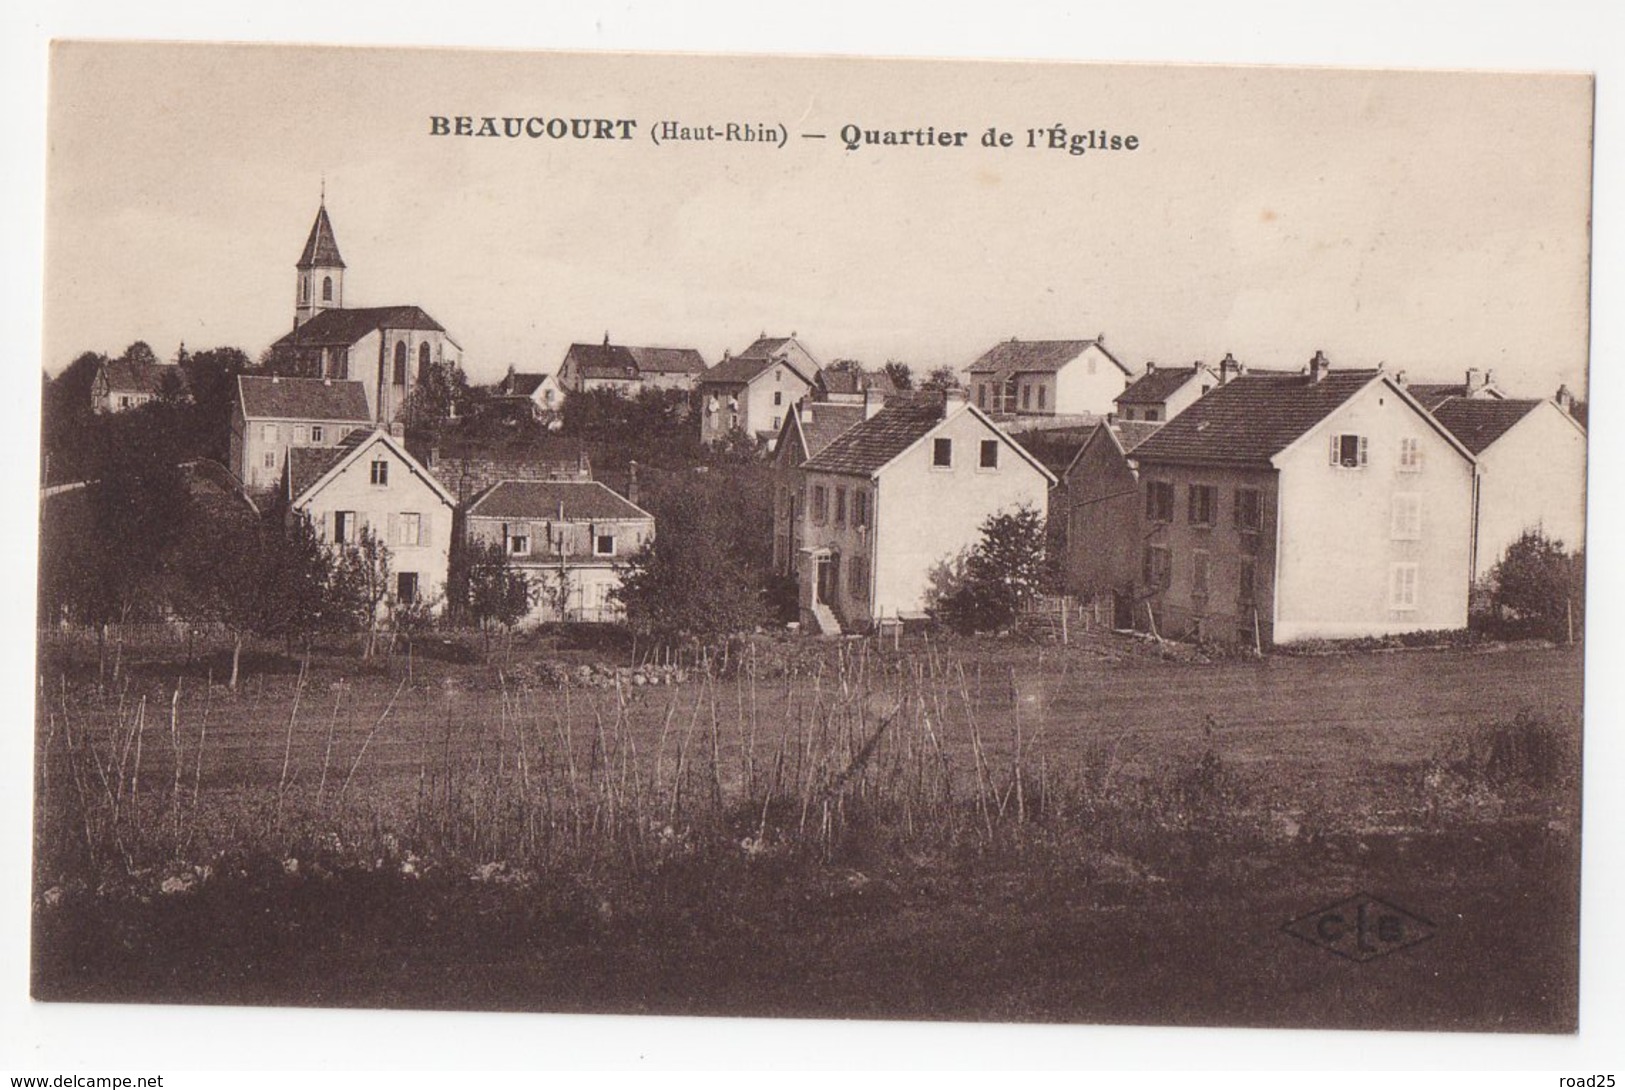 ( 90 ) Territoire de Belfort - Lot de 100 cartes postales